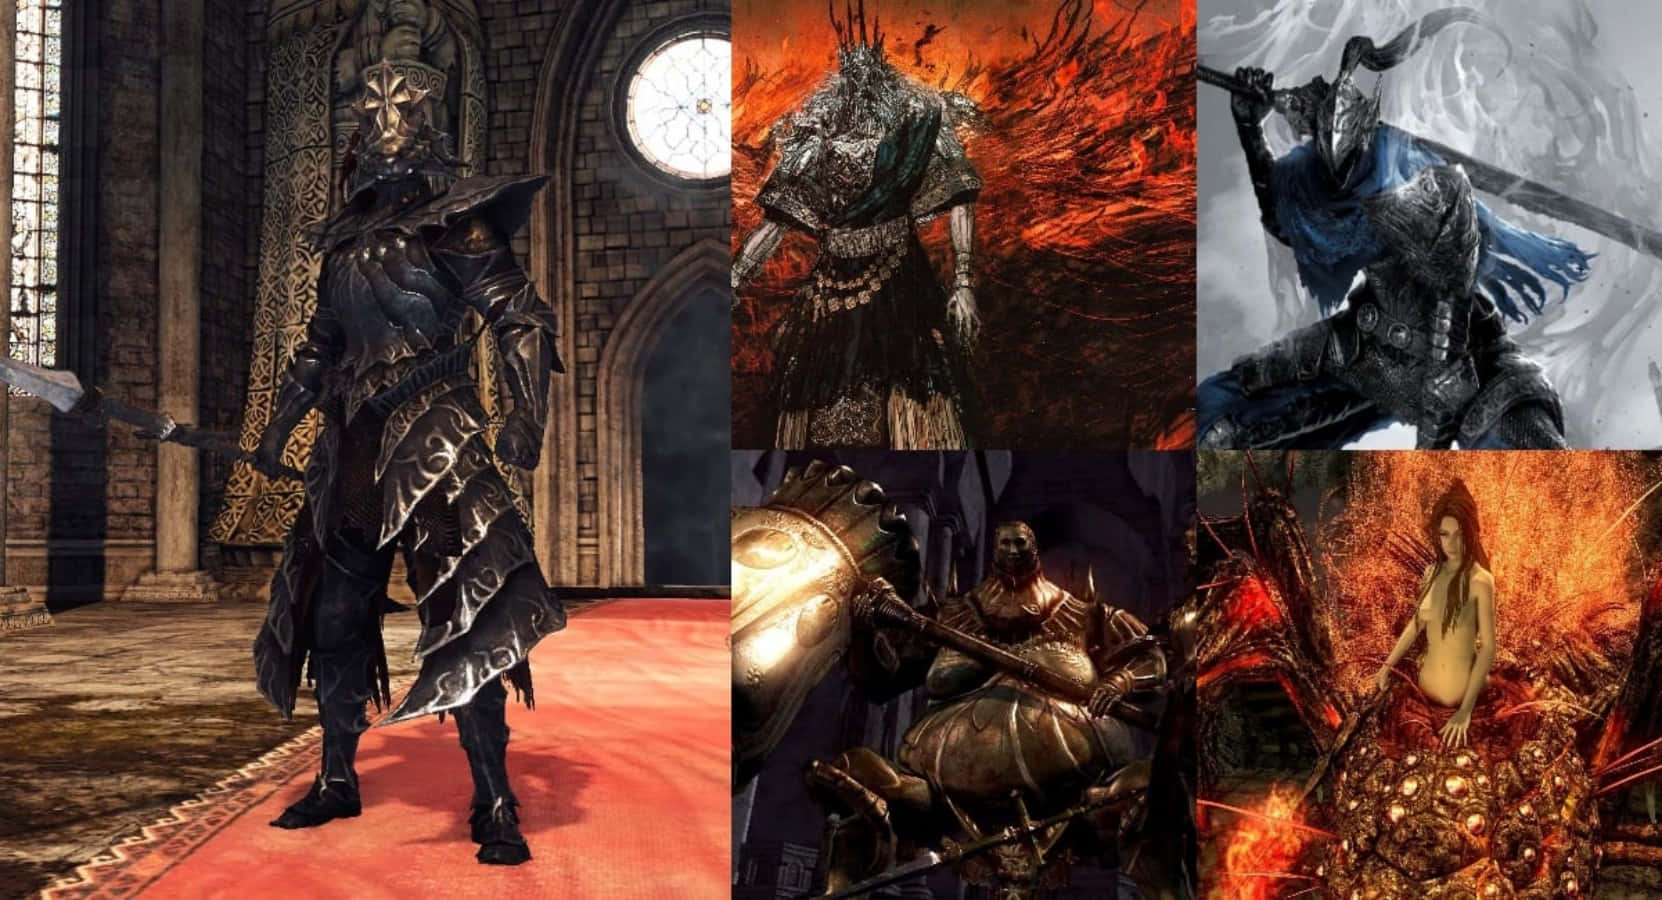 Challenging Dark Souls Bosses Await in the Epic Battle Wallpaper